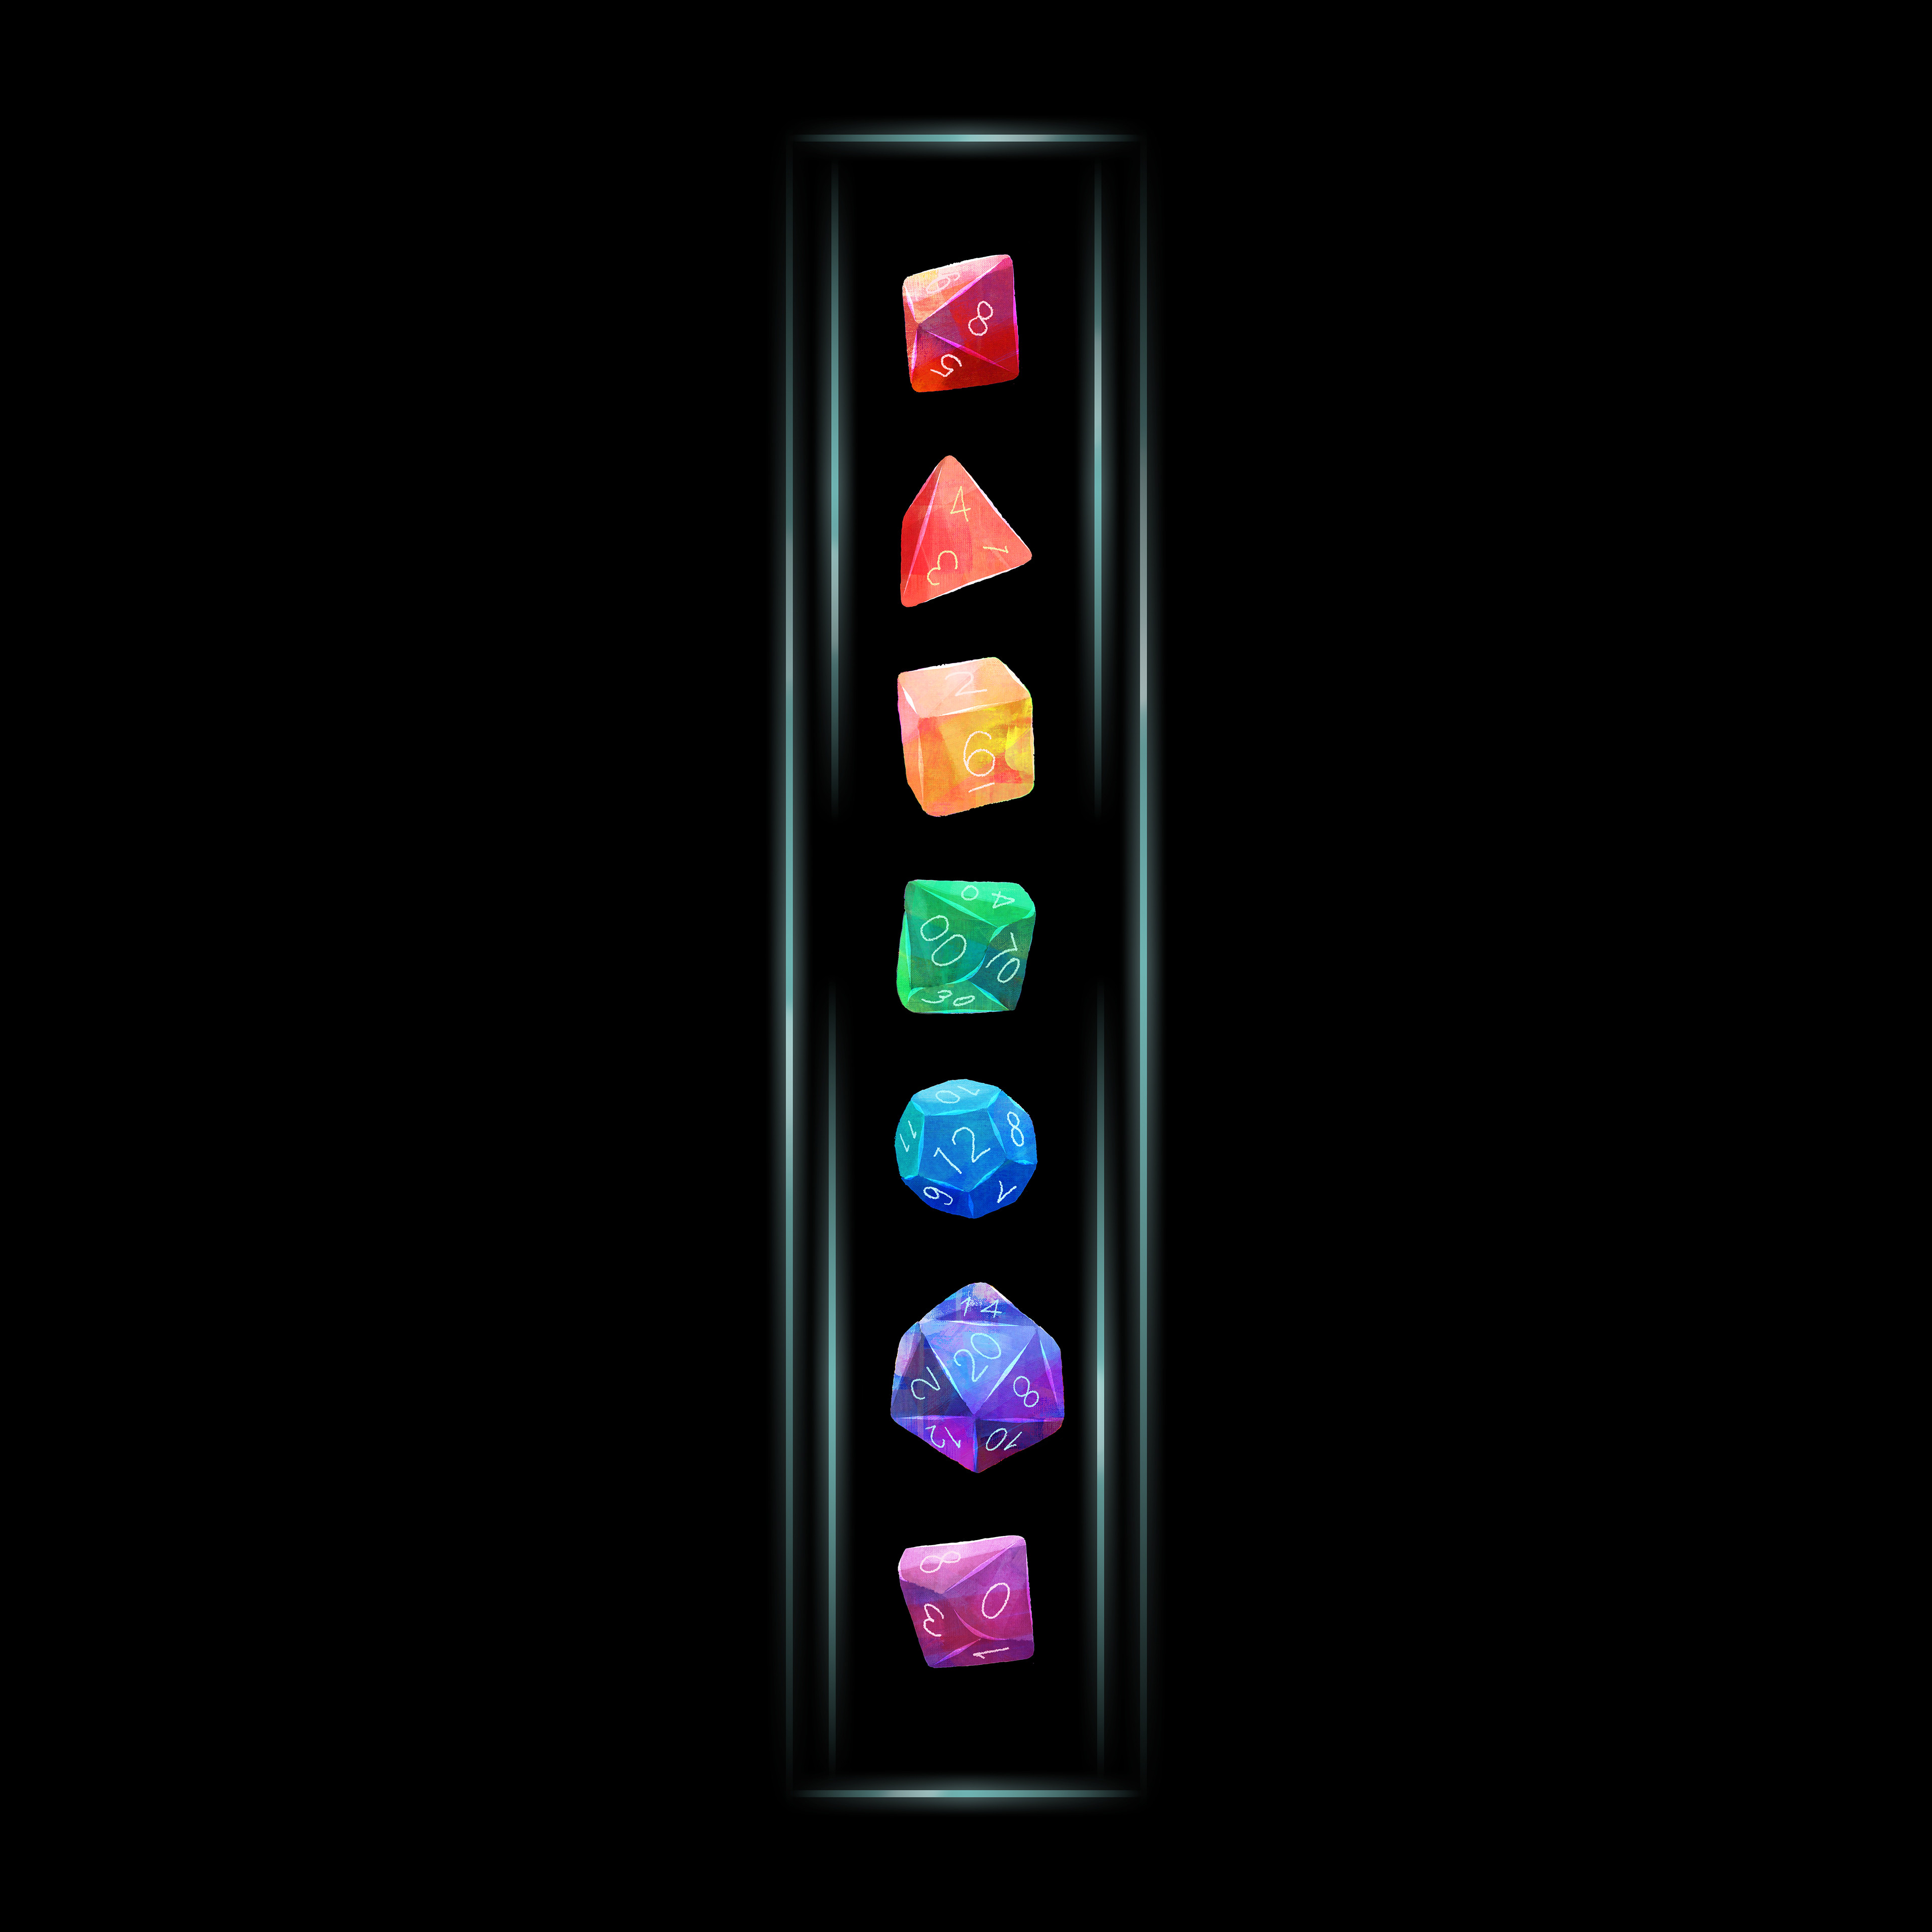 Rainbow dice